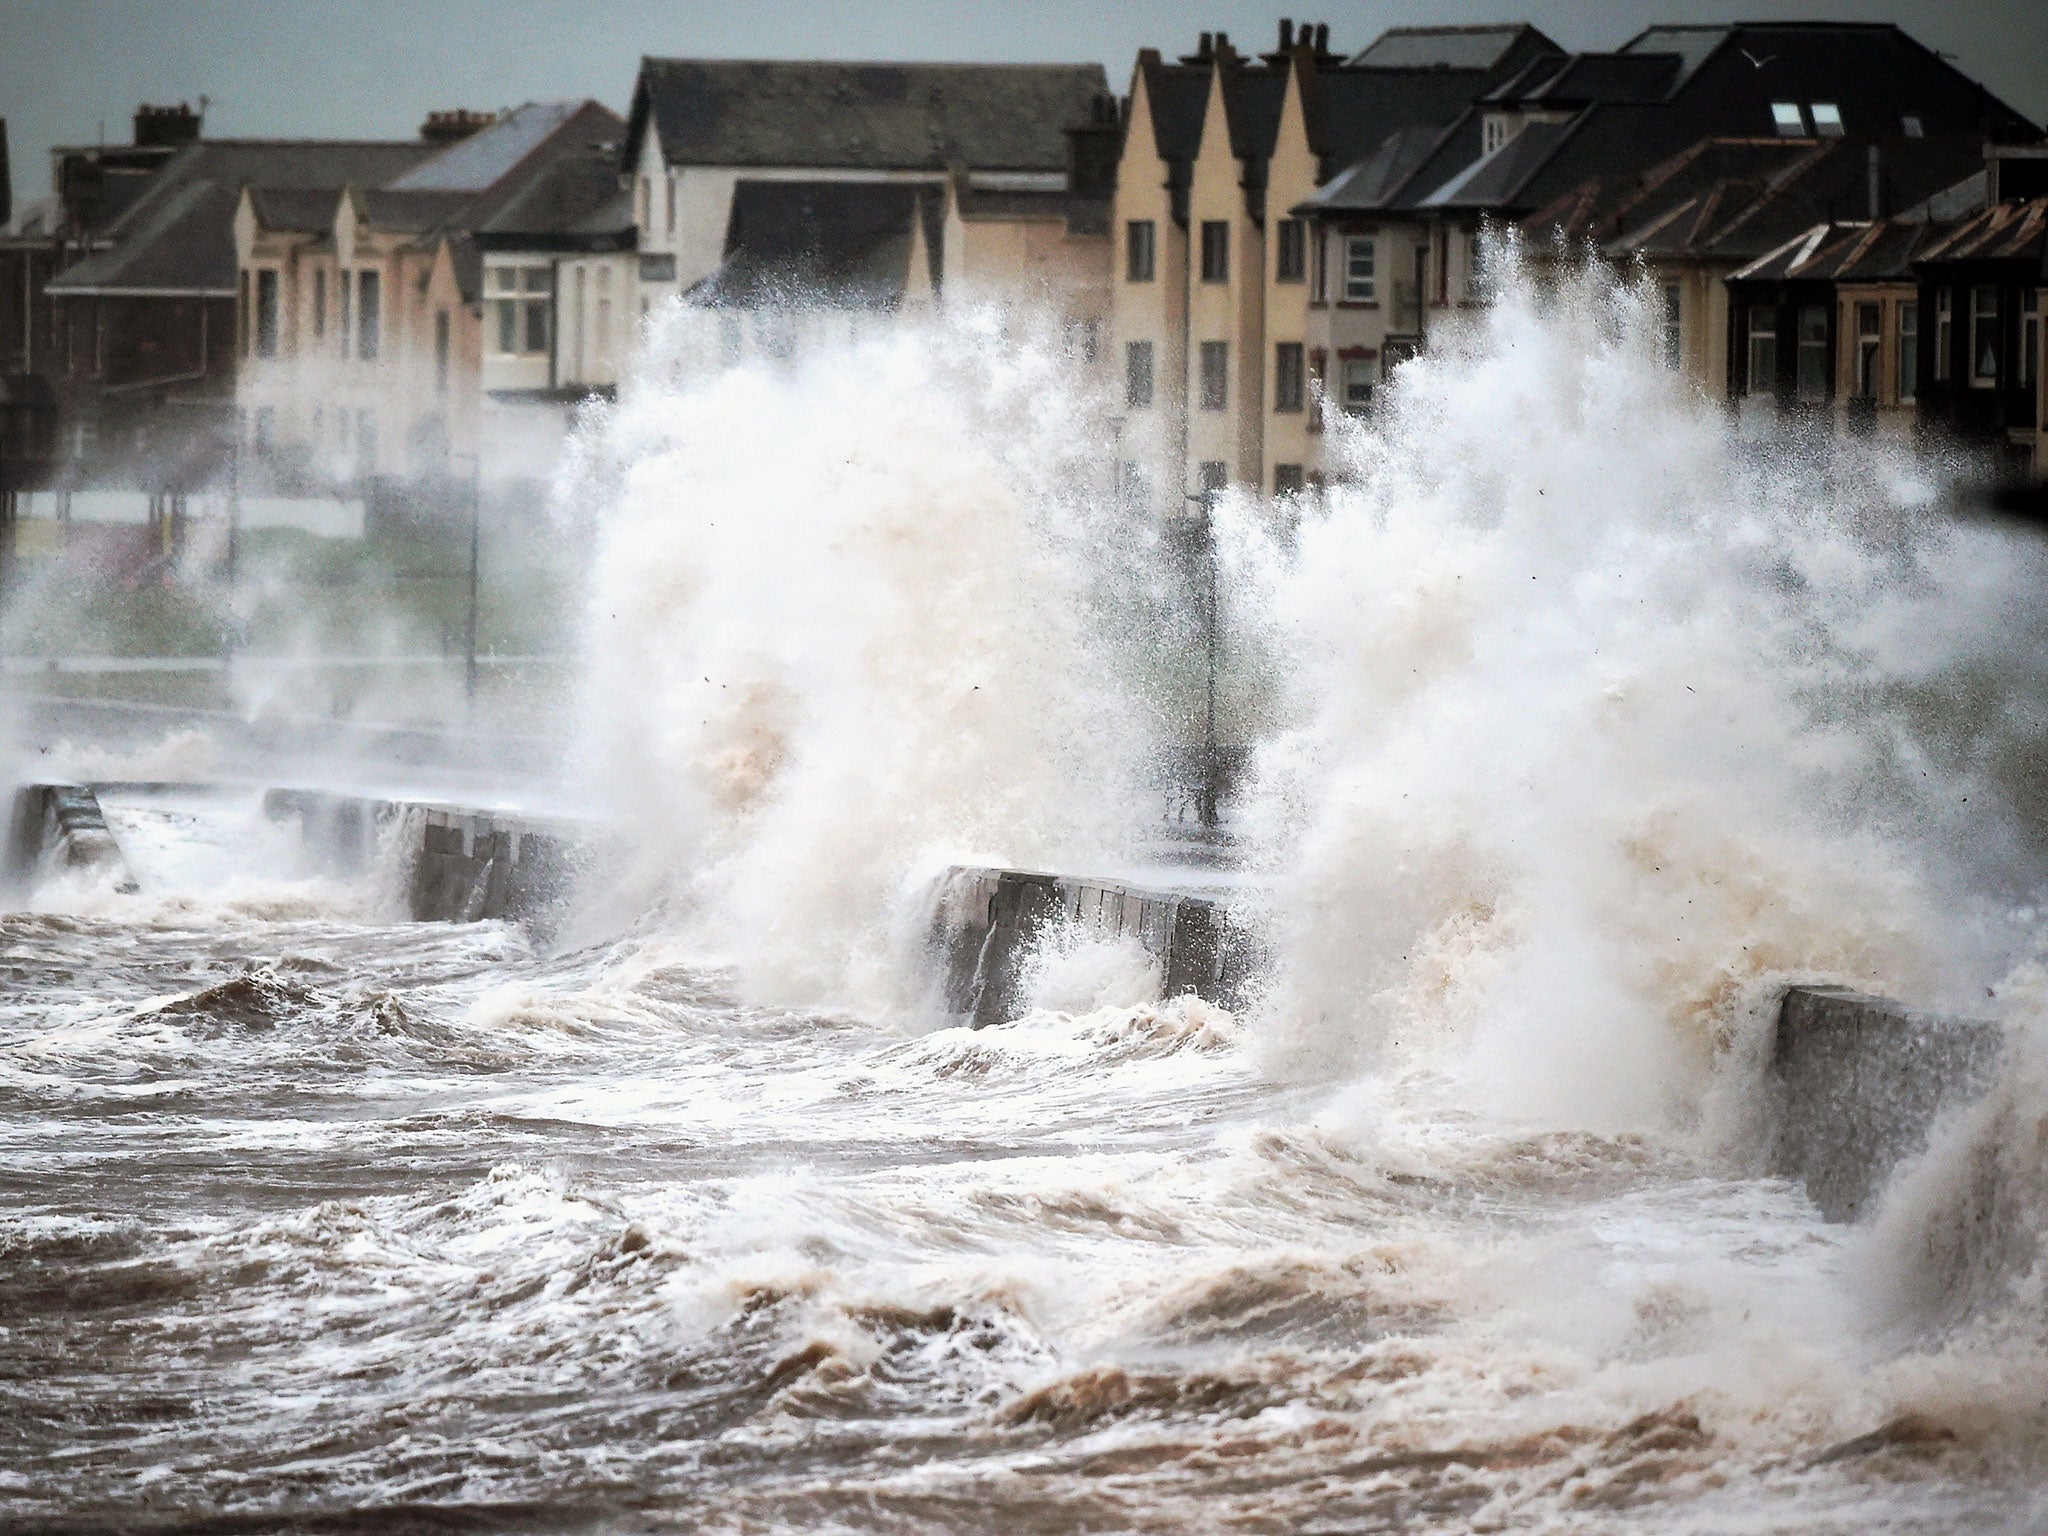 Waves crash over the promenade wall in Prestwick, Scotland.